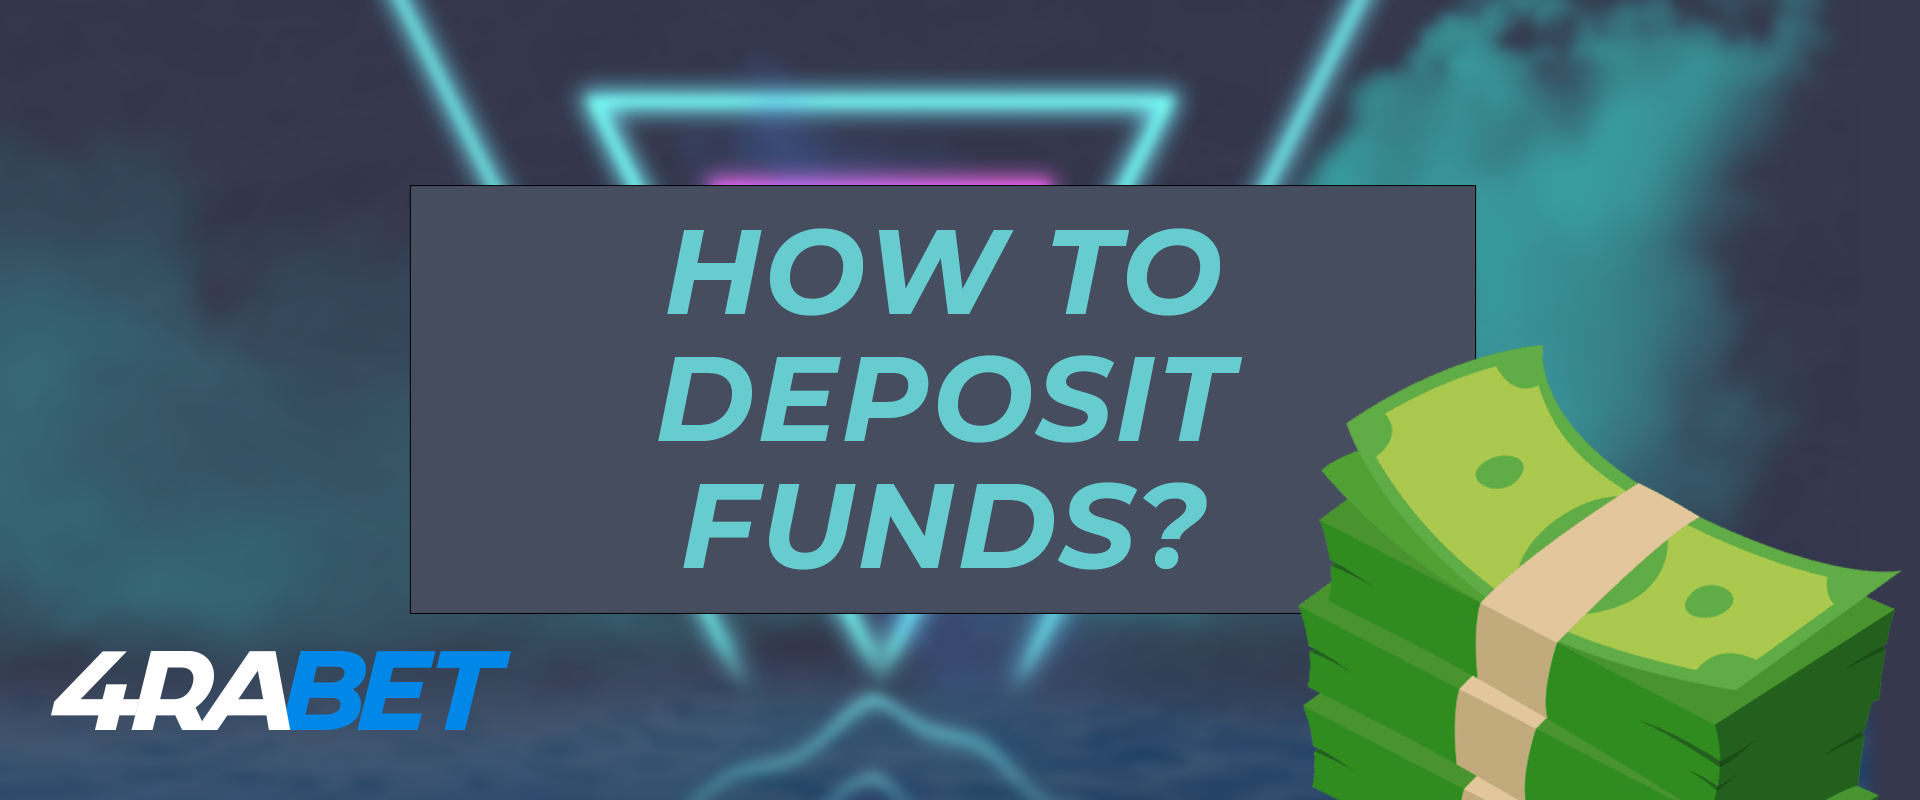 How to deposit money on the 4rabet.